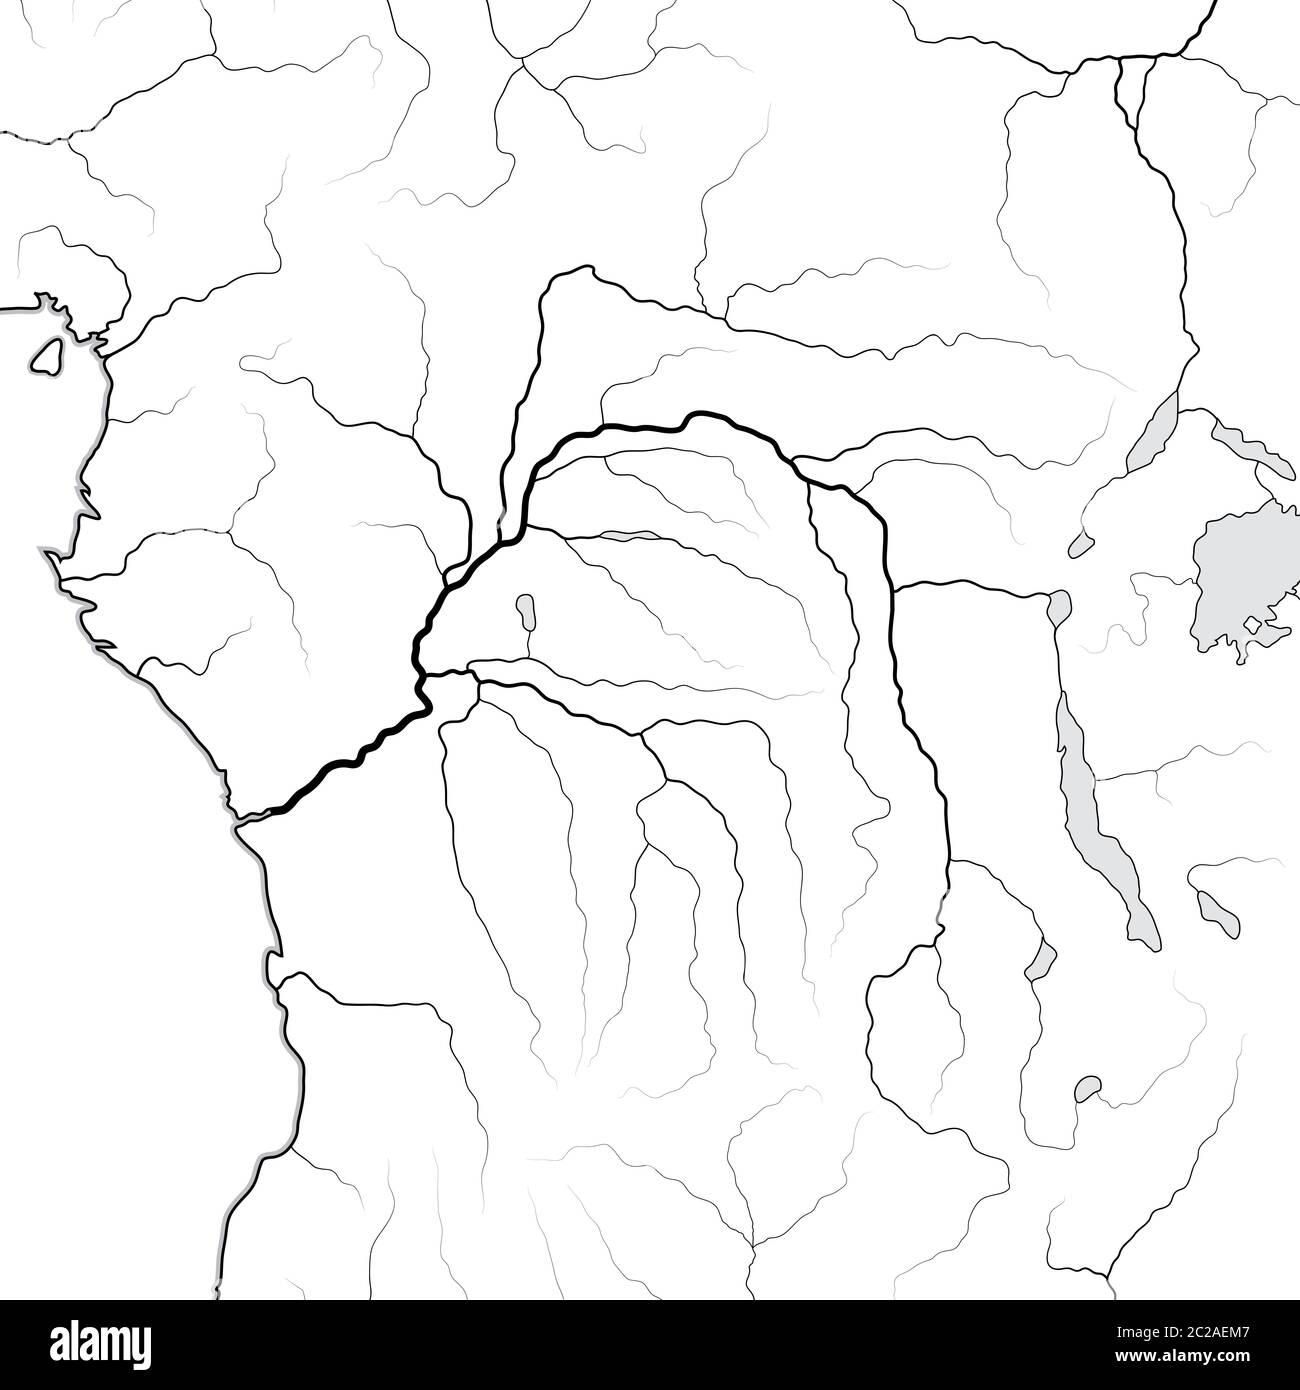 Weltkarte des KONGO-FLUSSBECKENS: Zentraläquatoriales Afrika, Kongo, Kongo, Zaire. Geografische Karte. Stockfoto